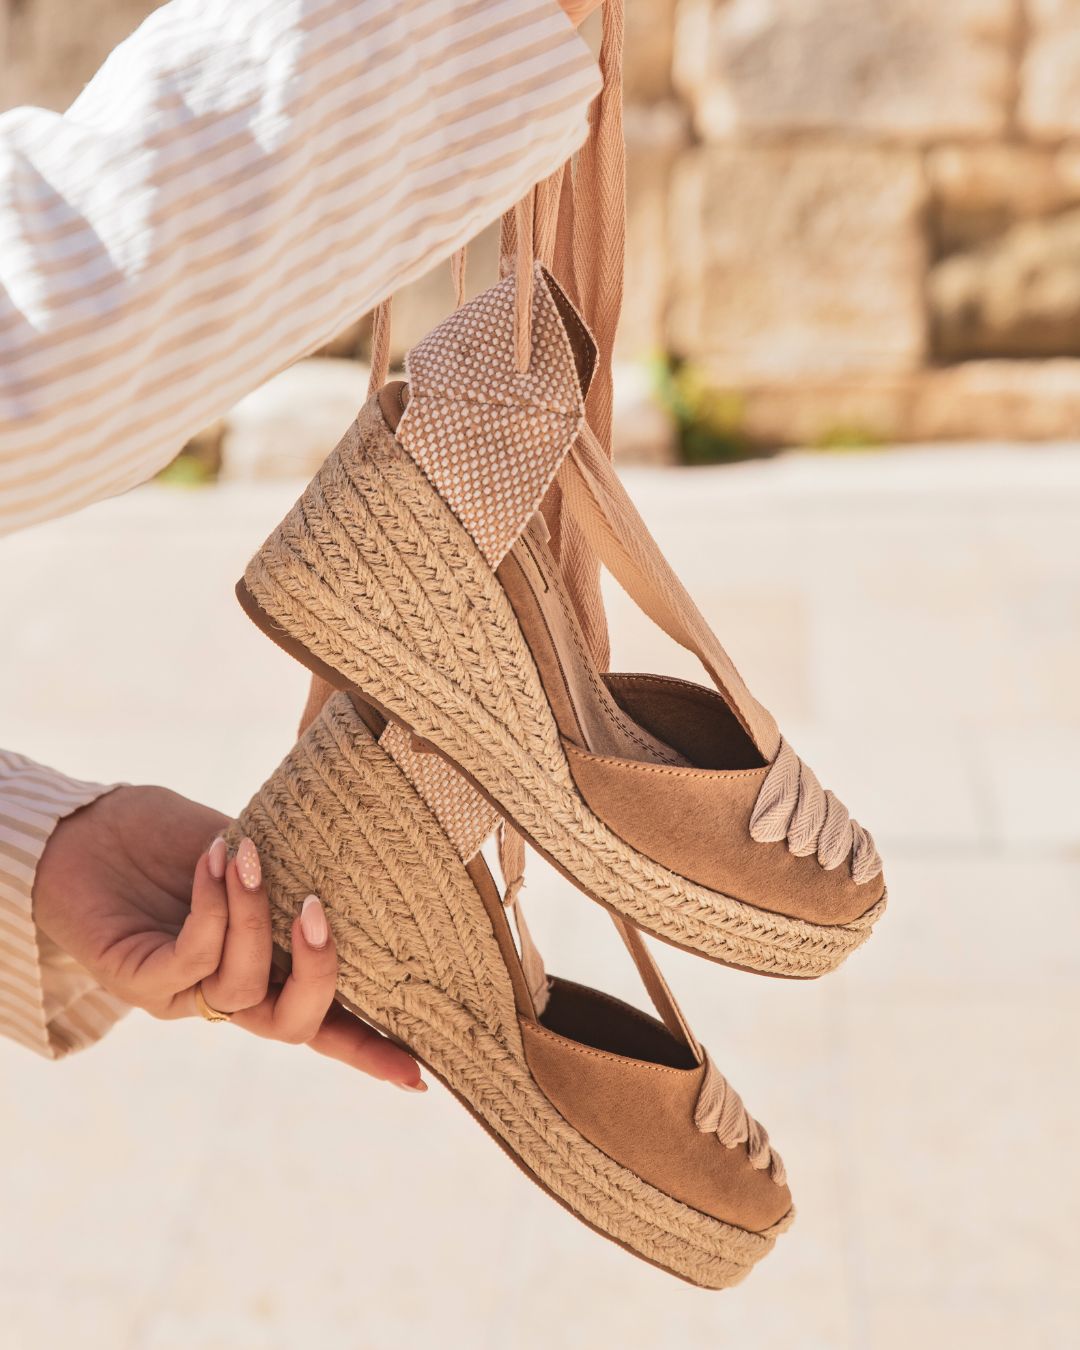 Die Damen-Sandalen mit Keilabsatz in Kamelfarbe - Kimberly - Casualmode.de